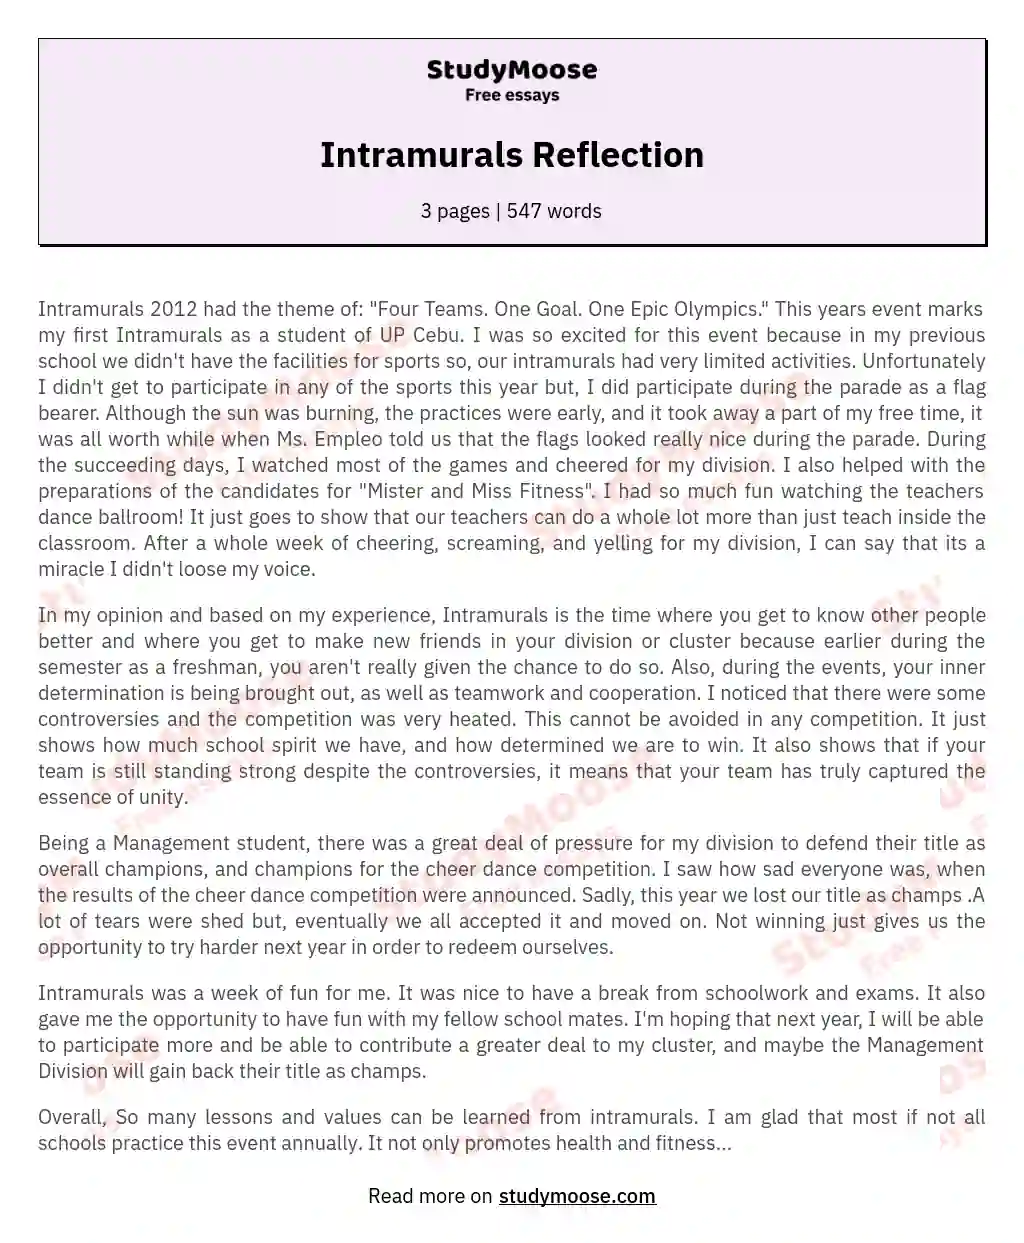 Intramurals Reflection essay